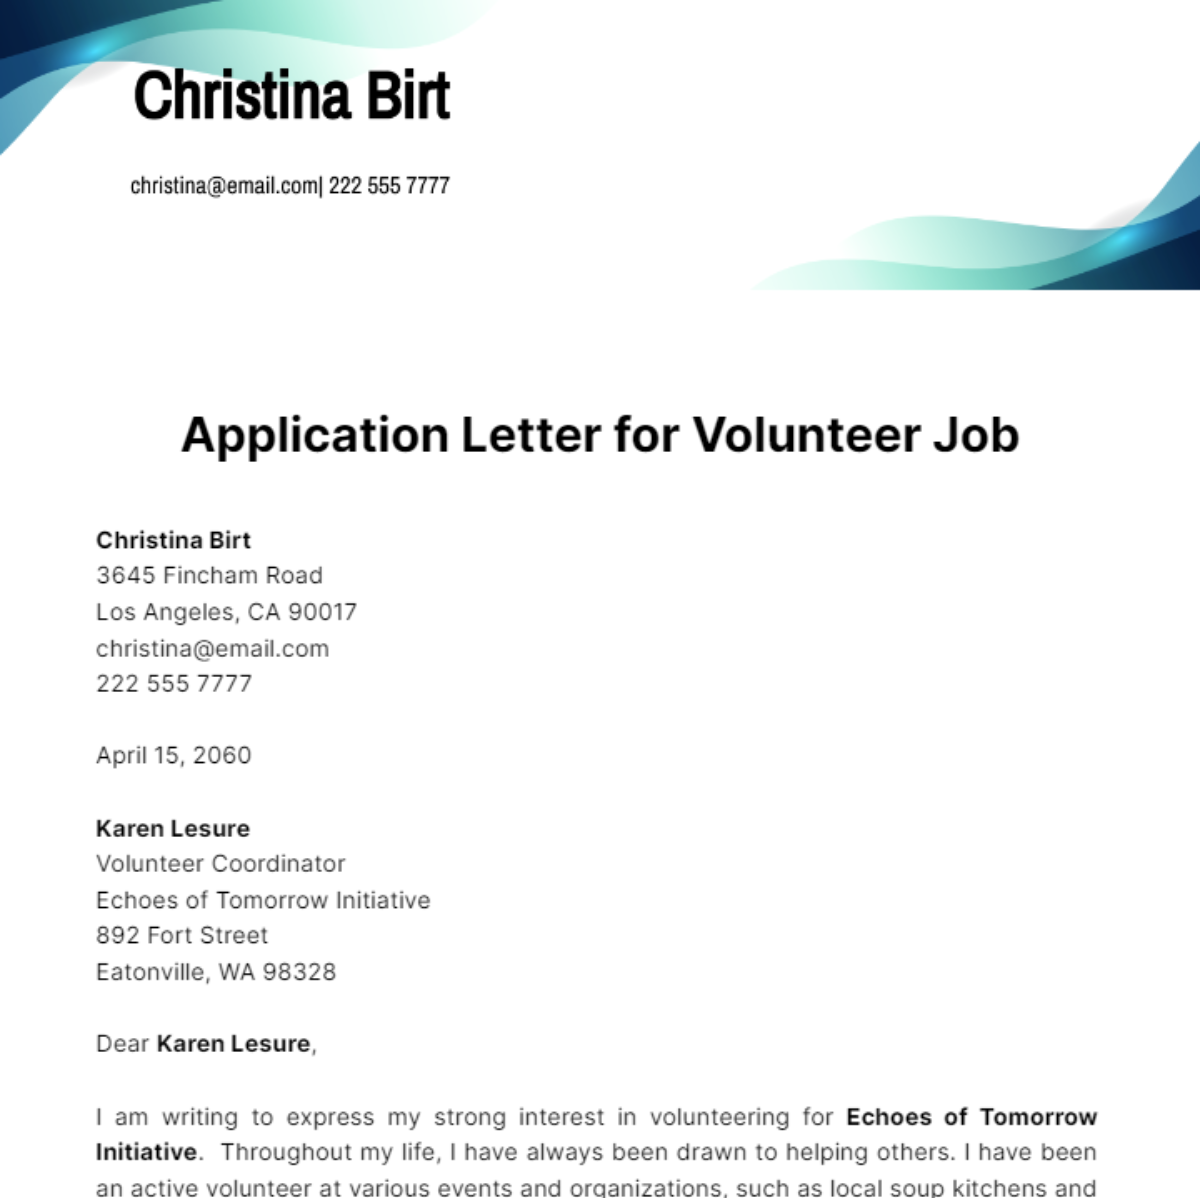 Application Letter for Volunteer Job Template